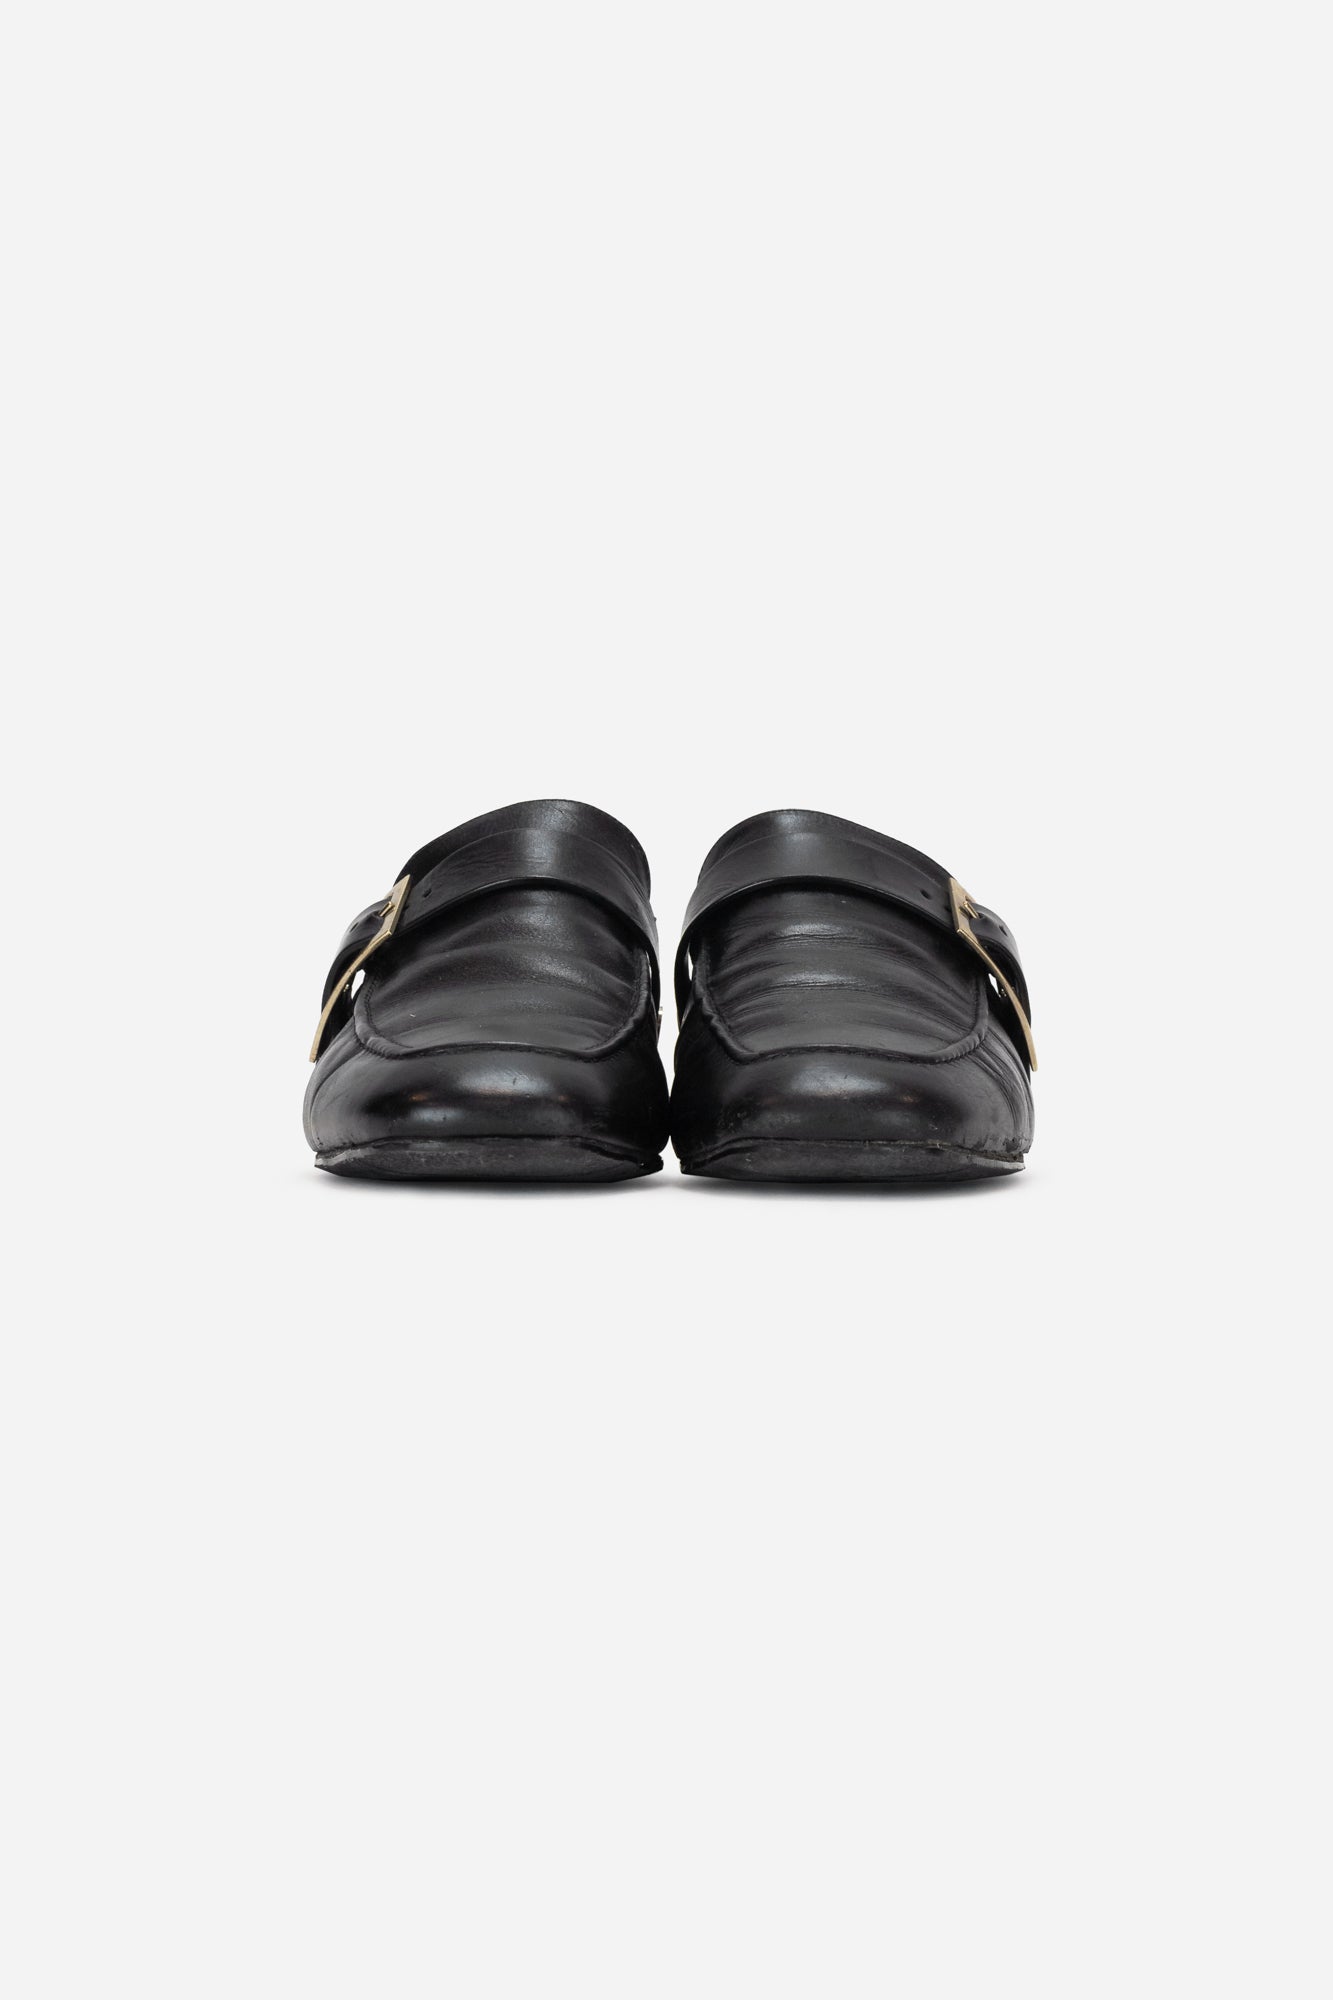 Slip on Loafer with Gold Heel Detail